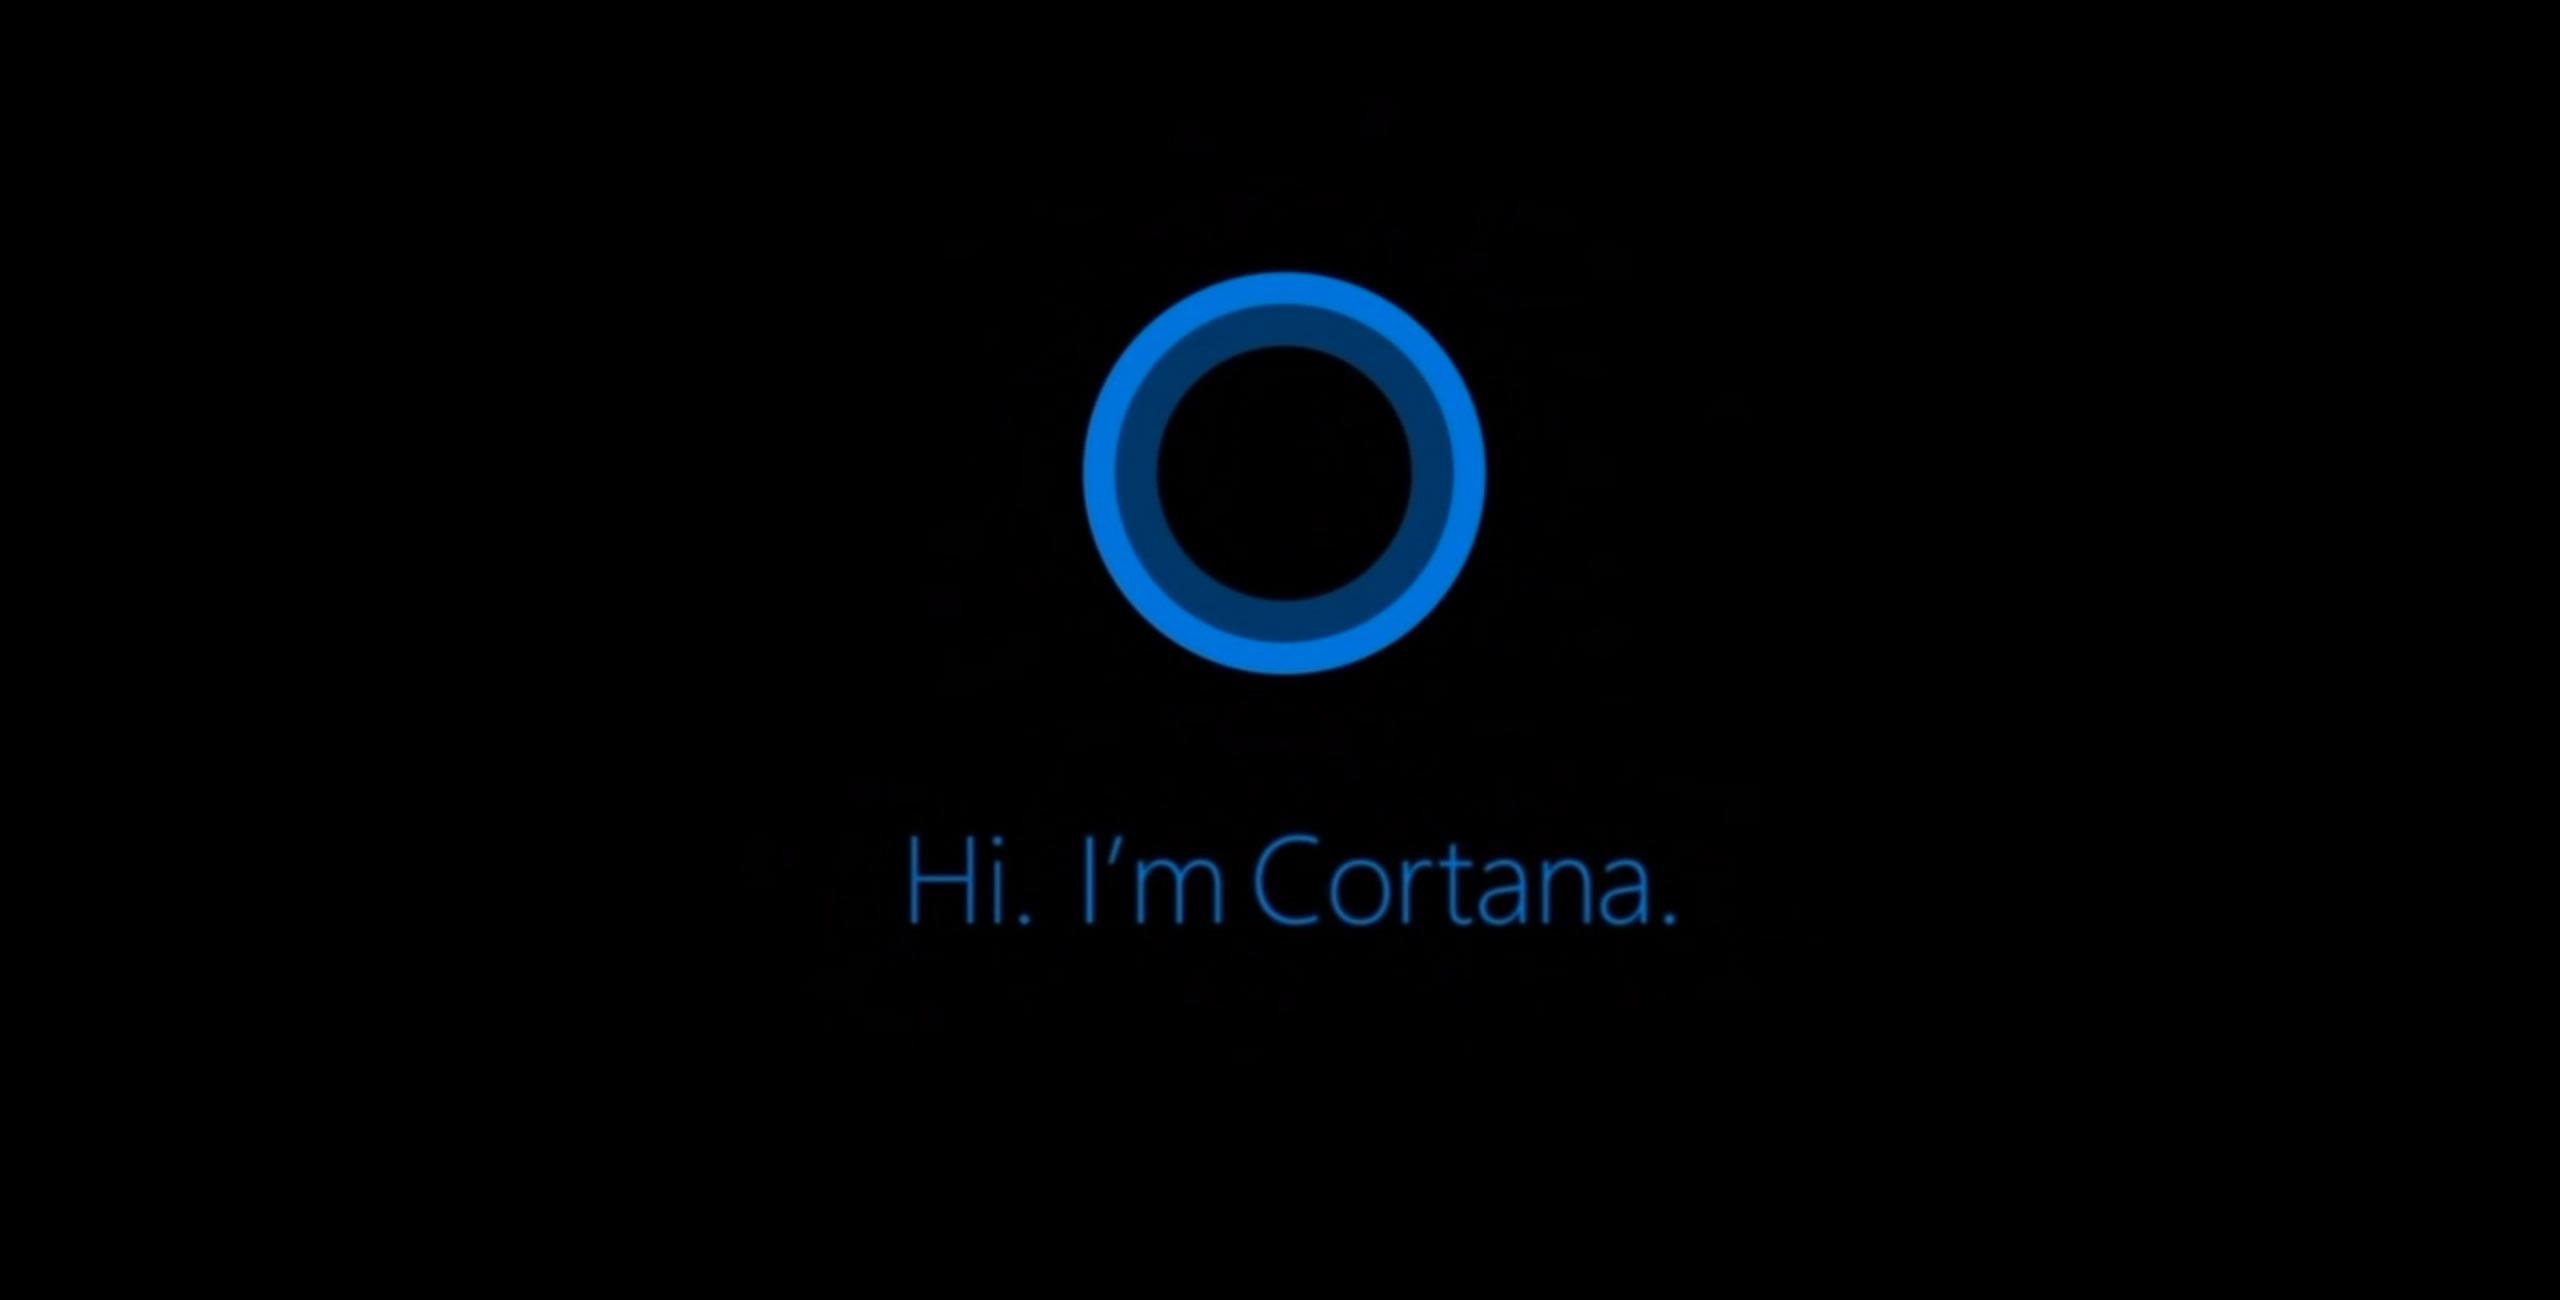 Cortana Takes on Siri in 3 New Videos From Microsoft 2560x1300